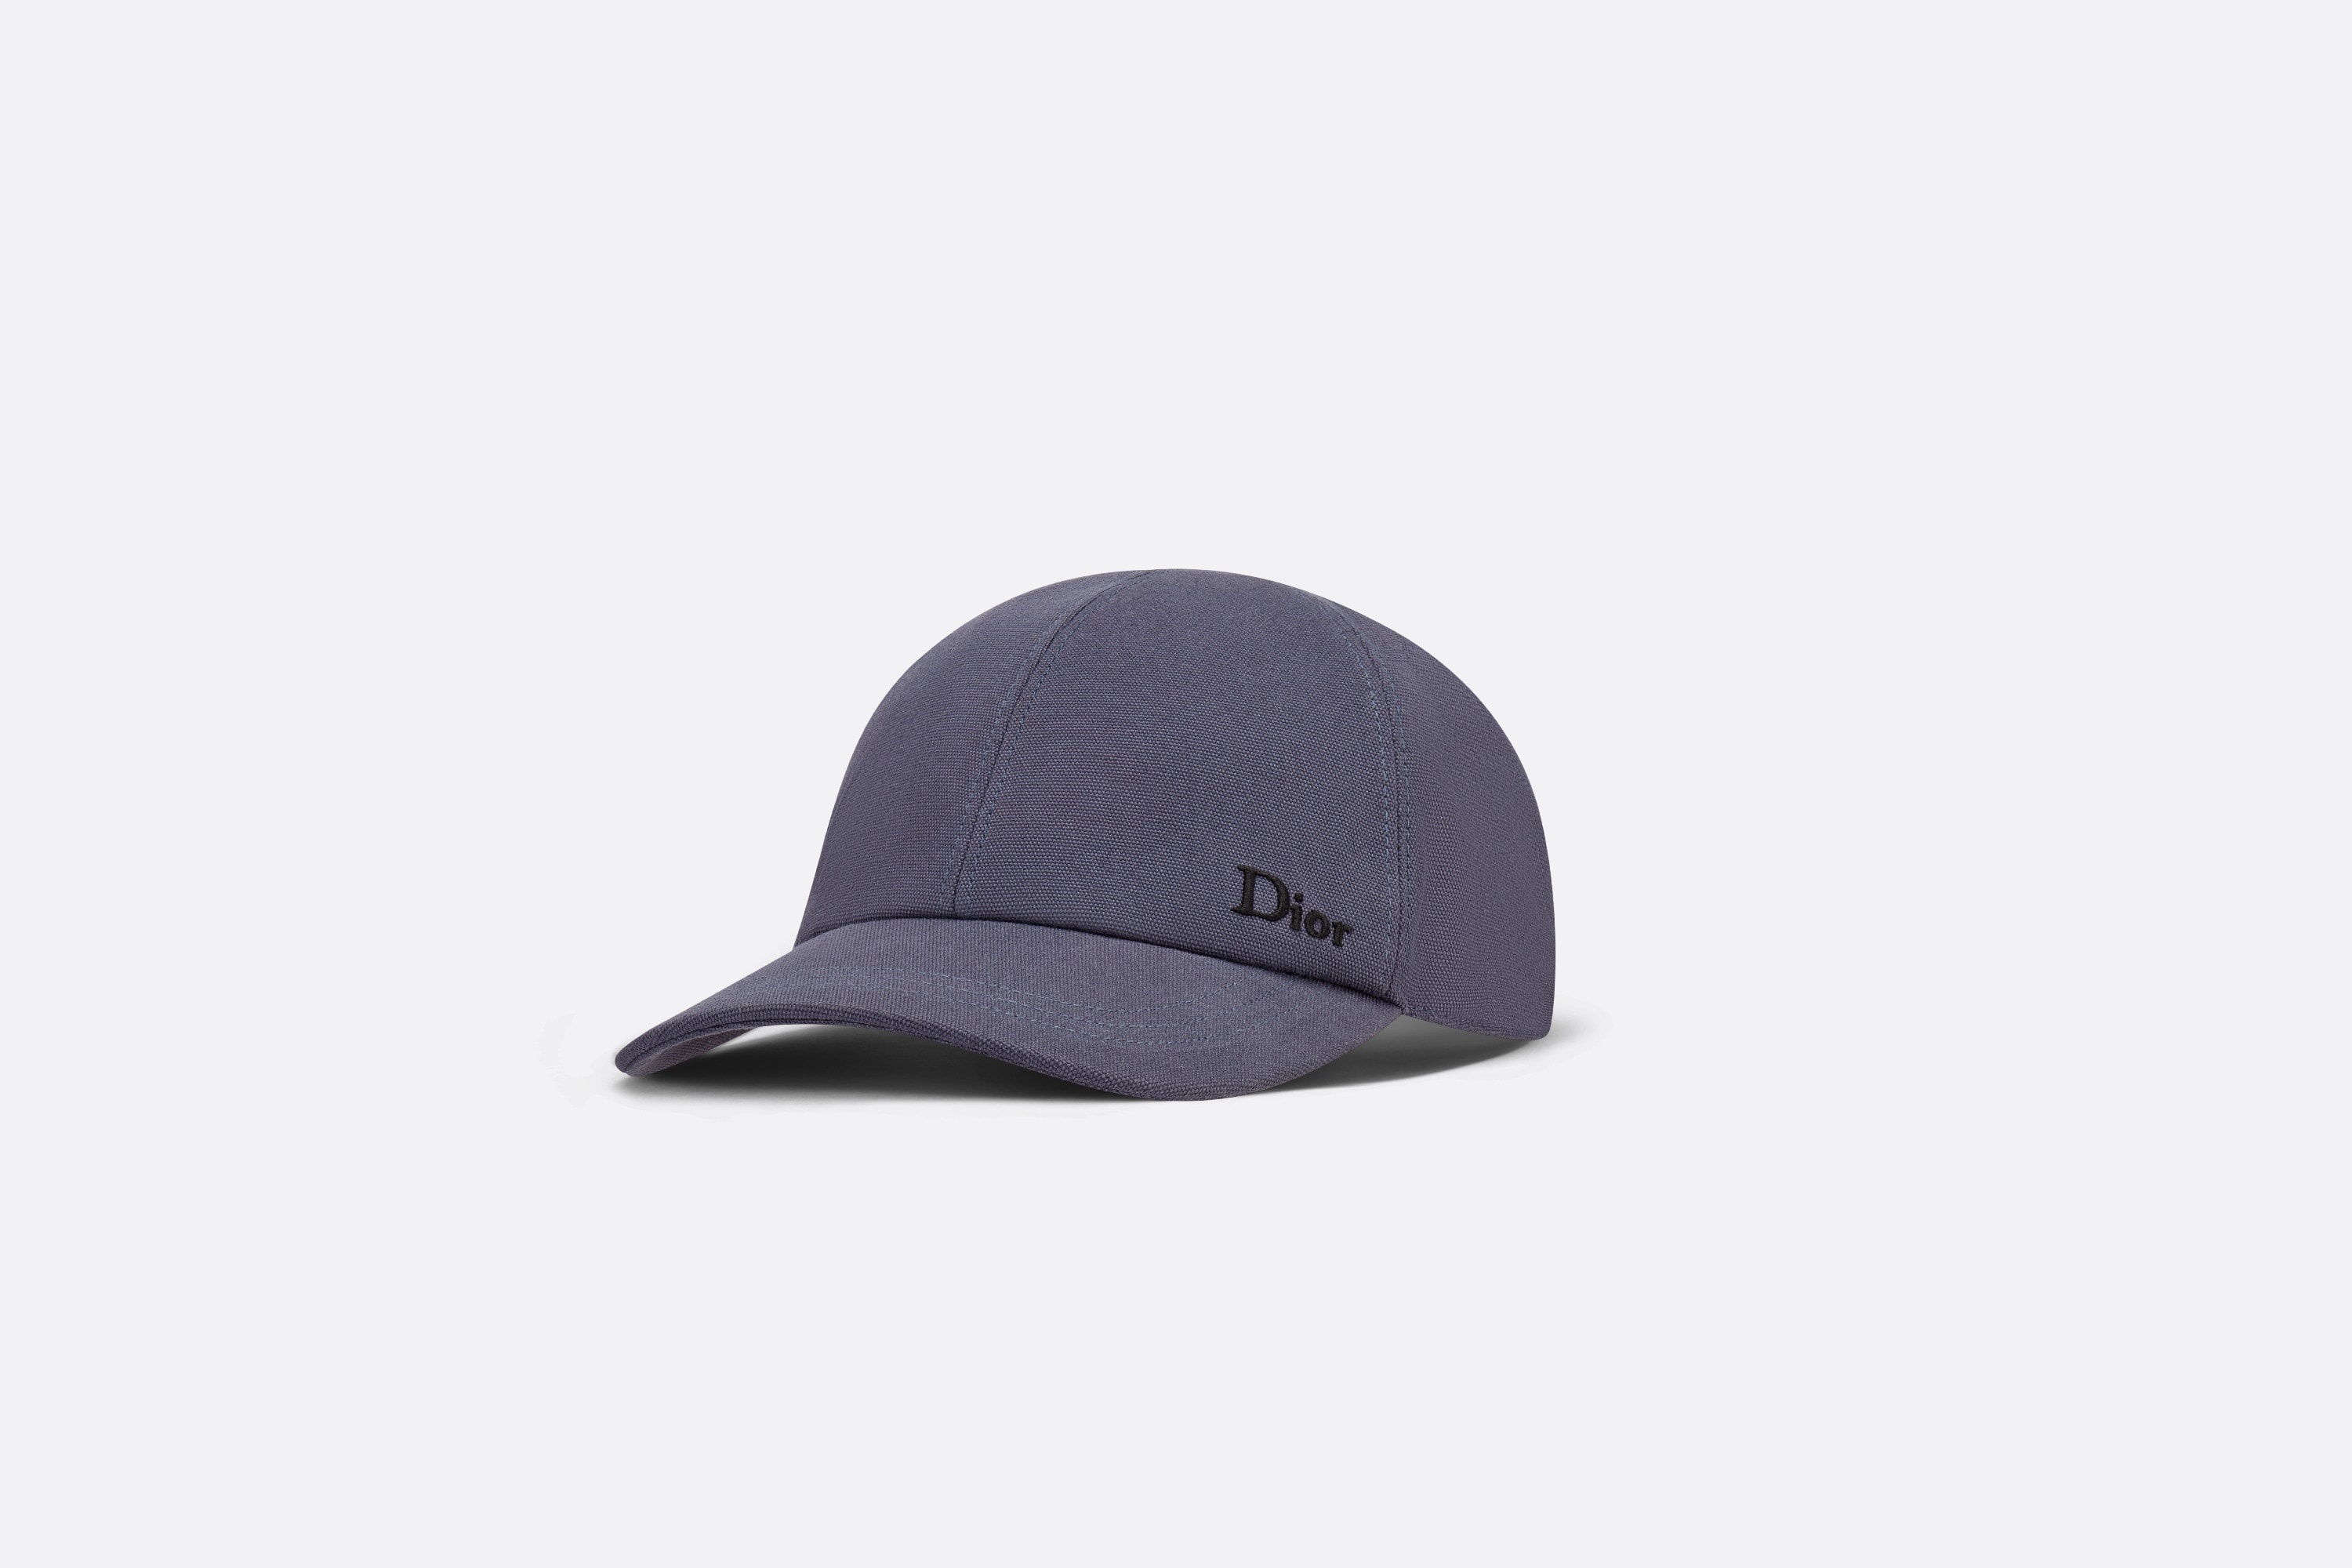 Dior Baseball Cap - 1